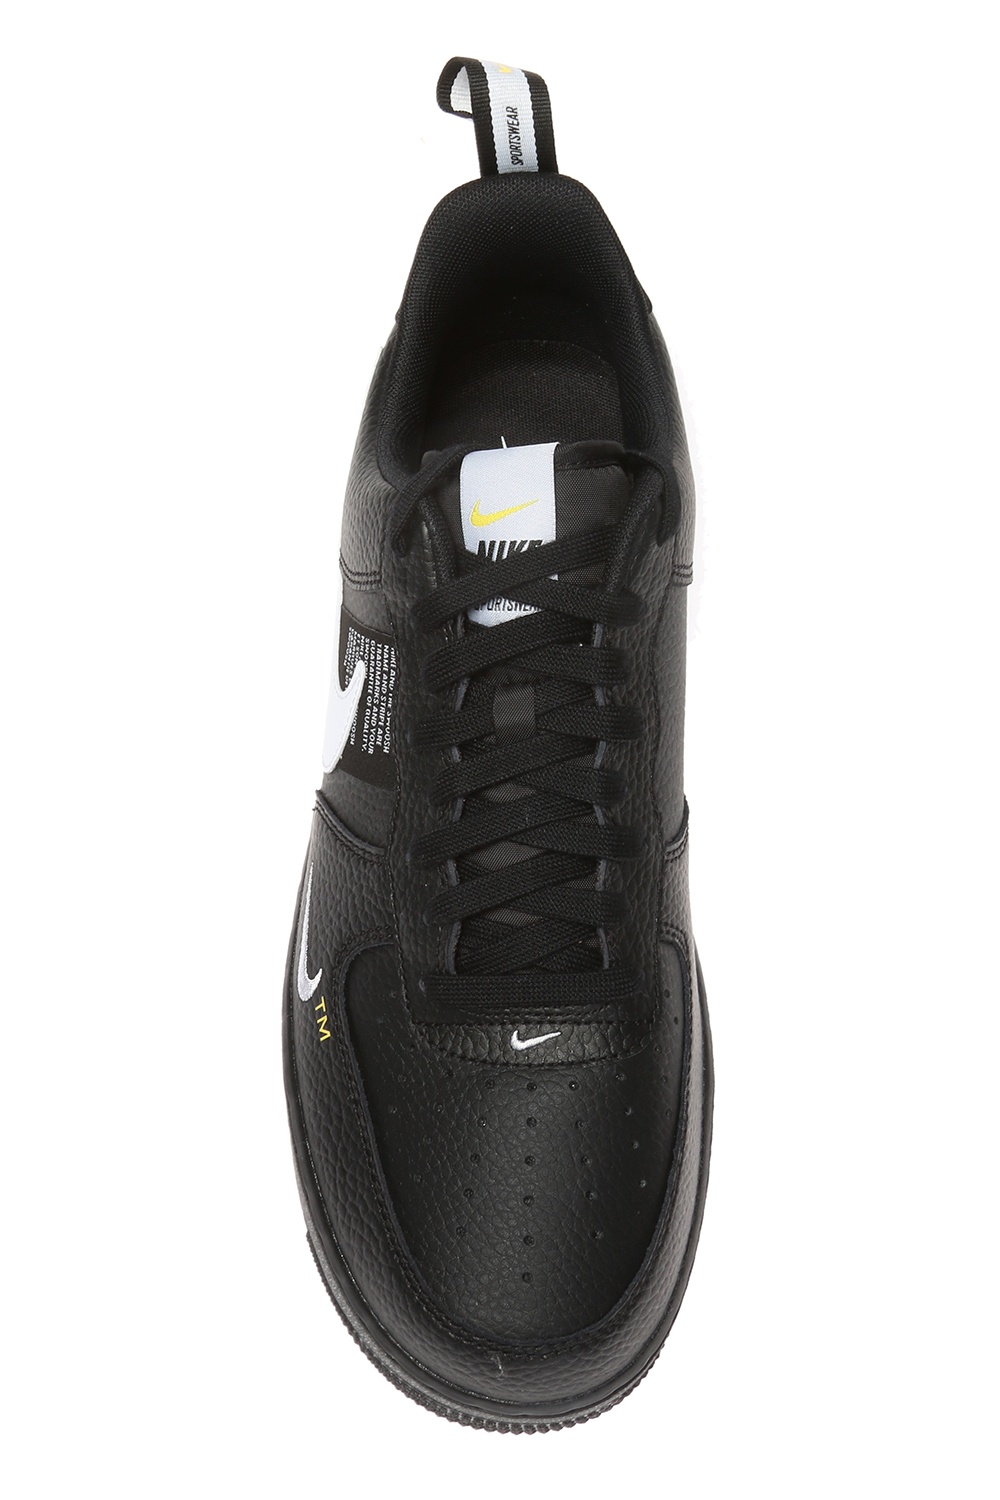 Nike Air Force 1 LV8 Black/White/Tour Yellow